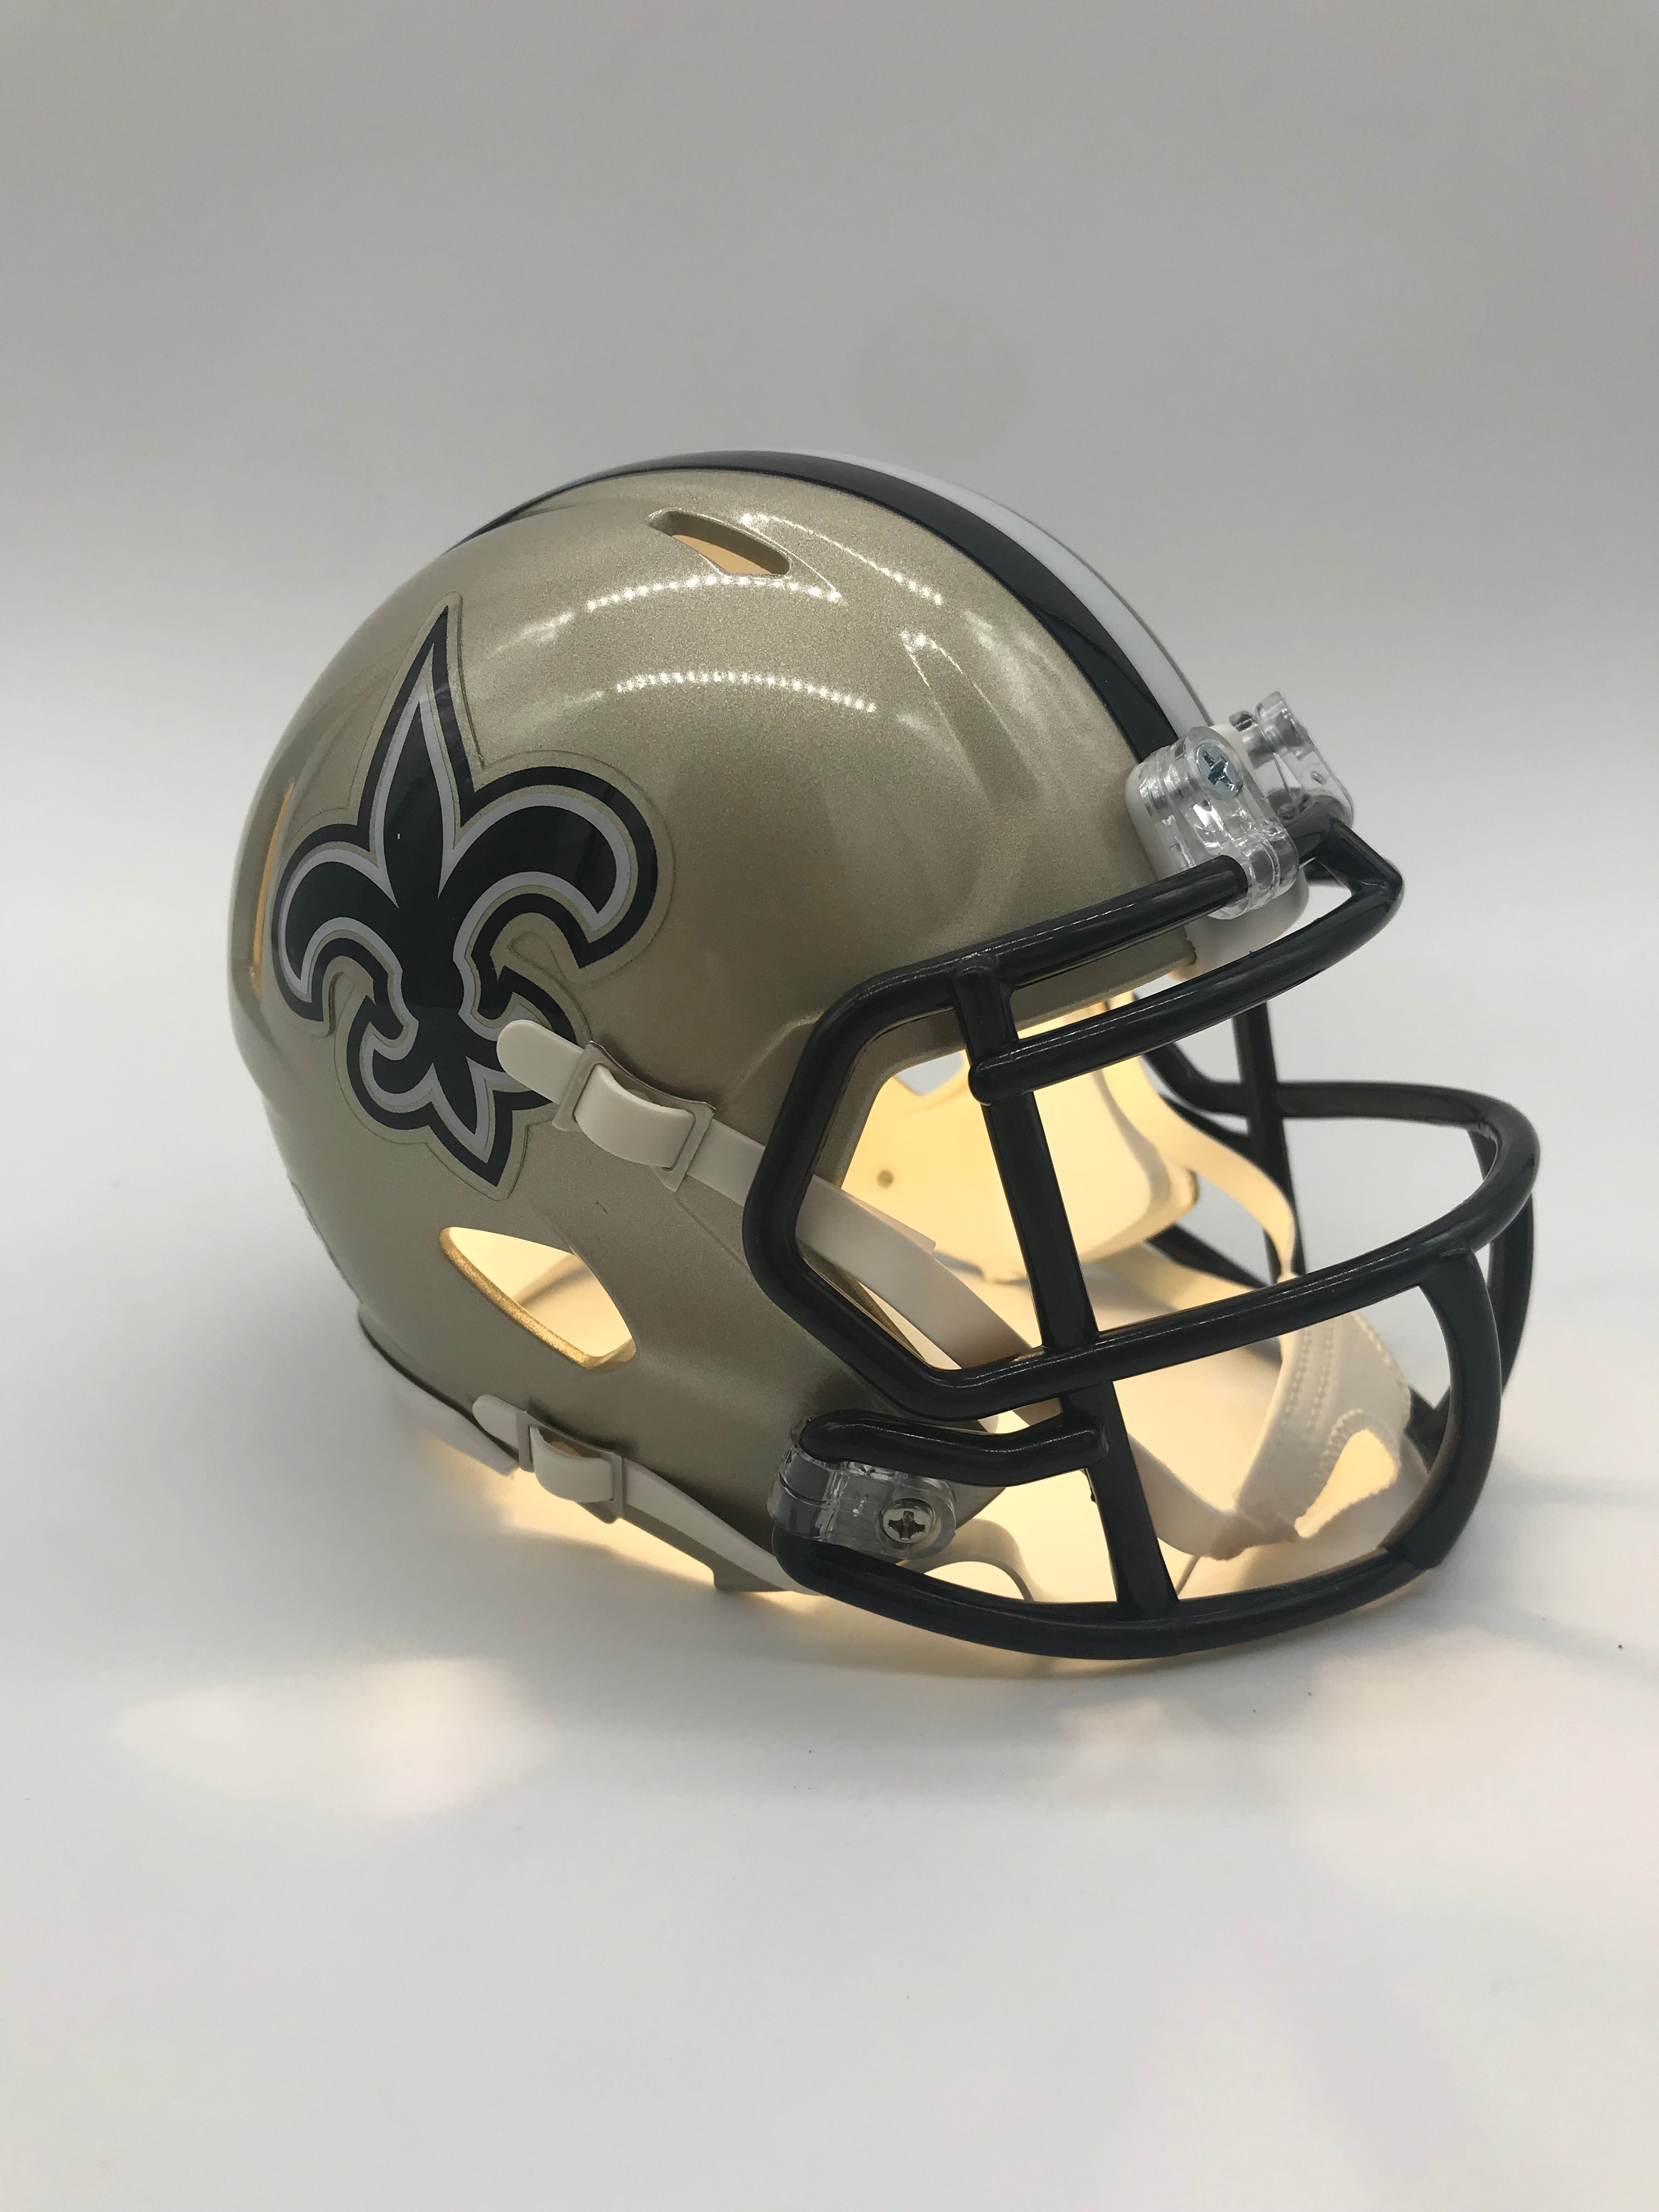 new orleans saints new football helmet